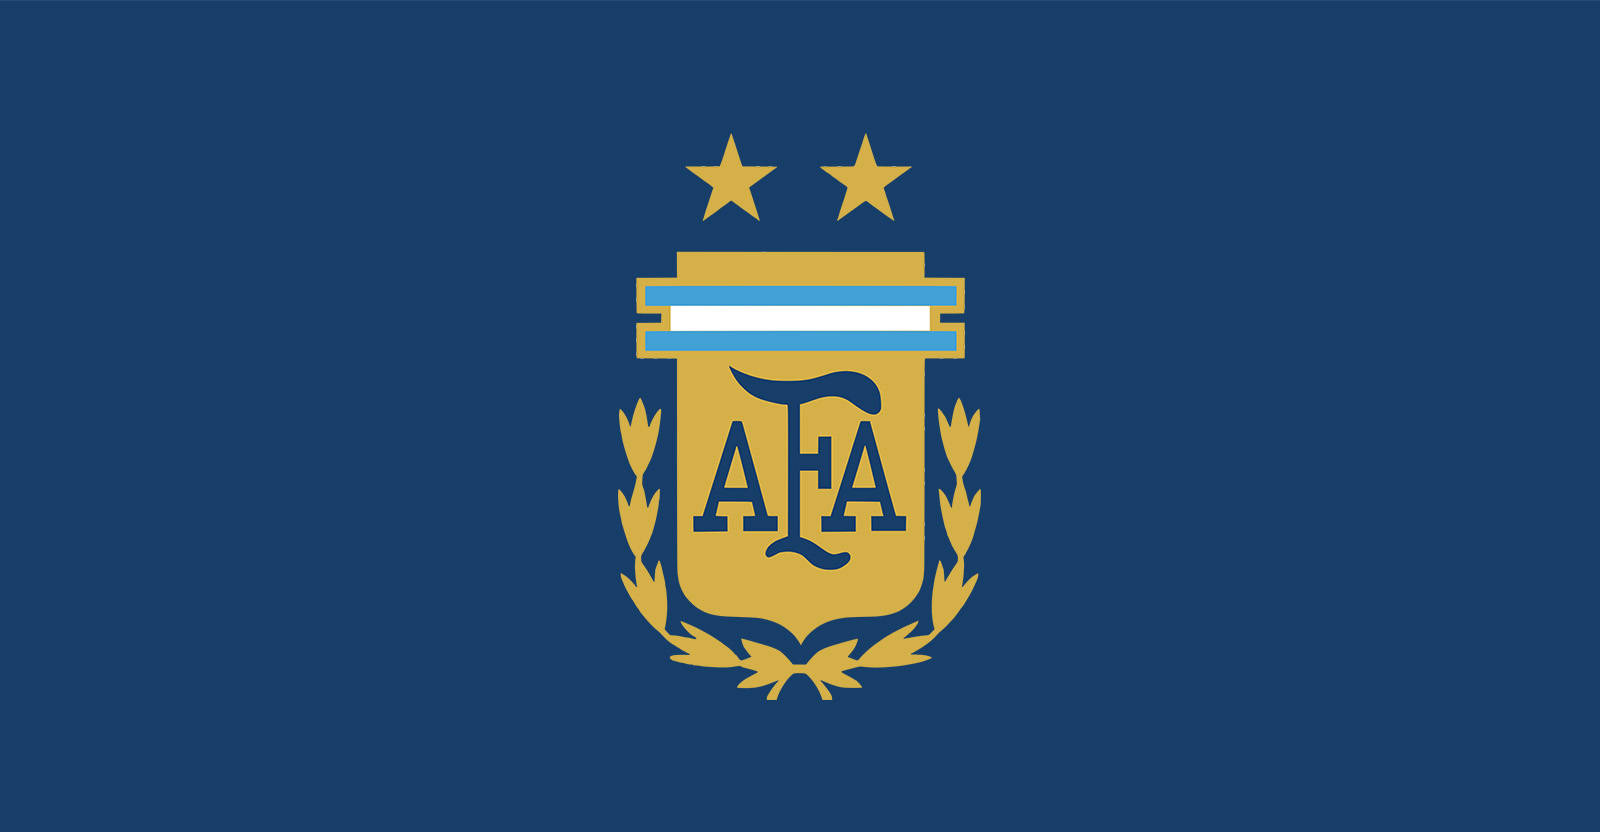 Argentina National Football Team Emblem On Blue Background